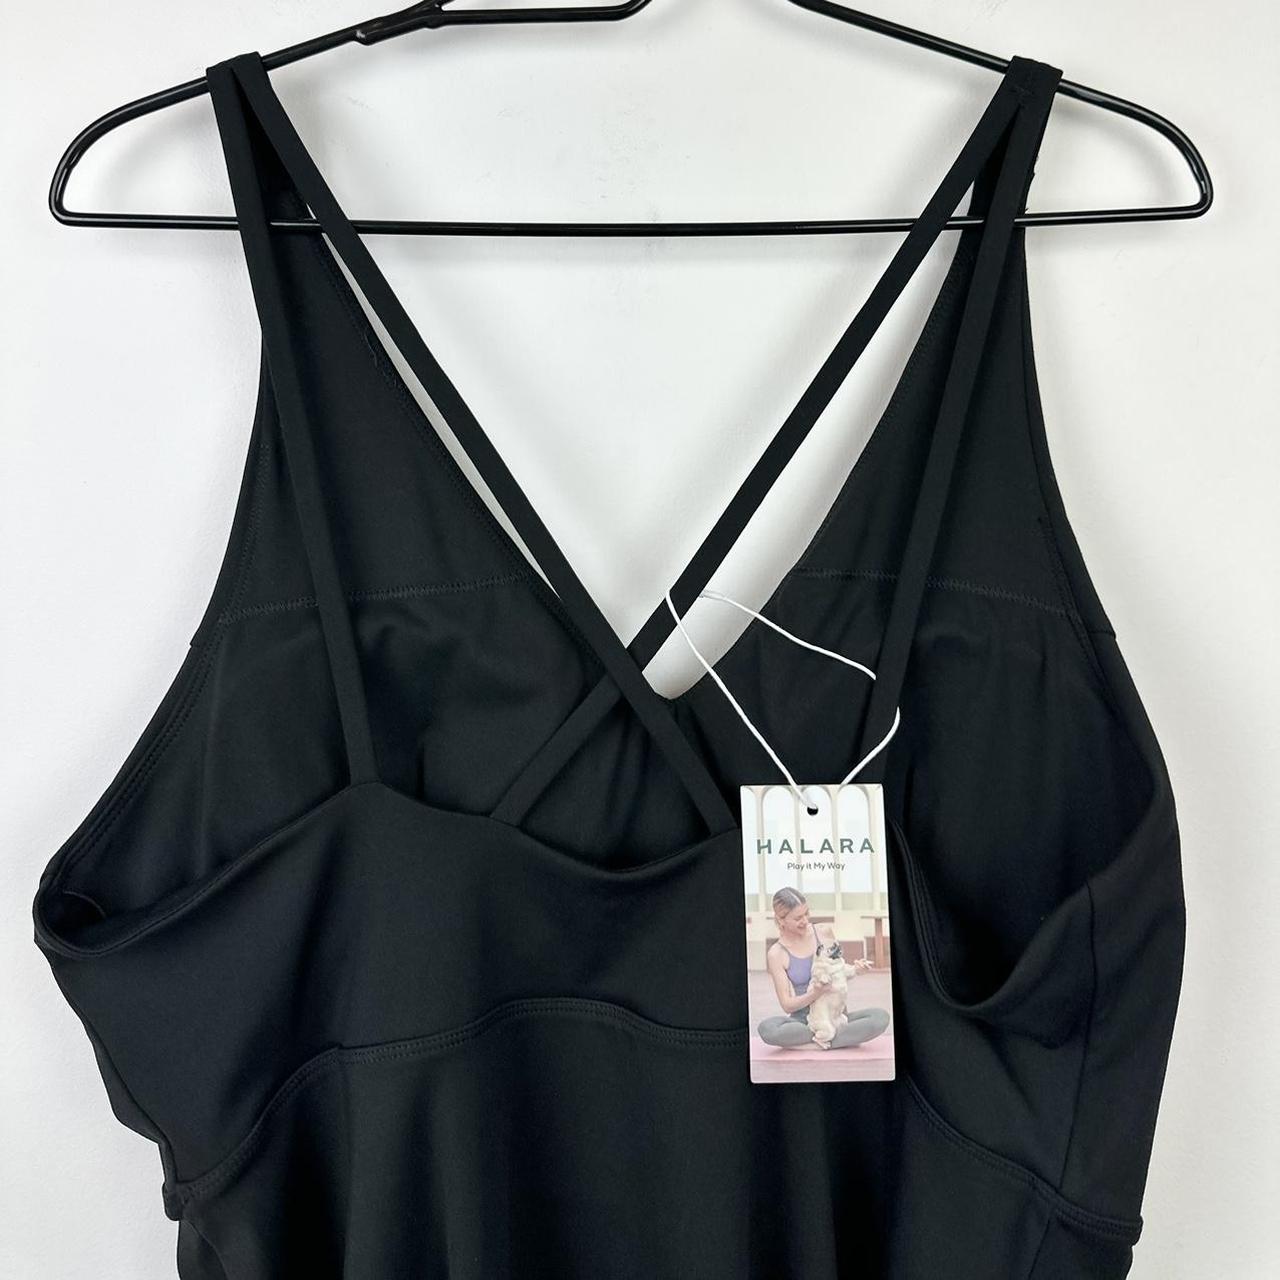 Halara Cloudful Dress XL Black Backless Crisscross - Depop